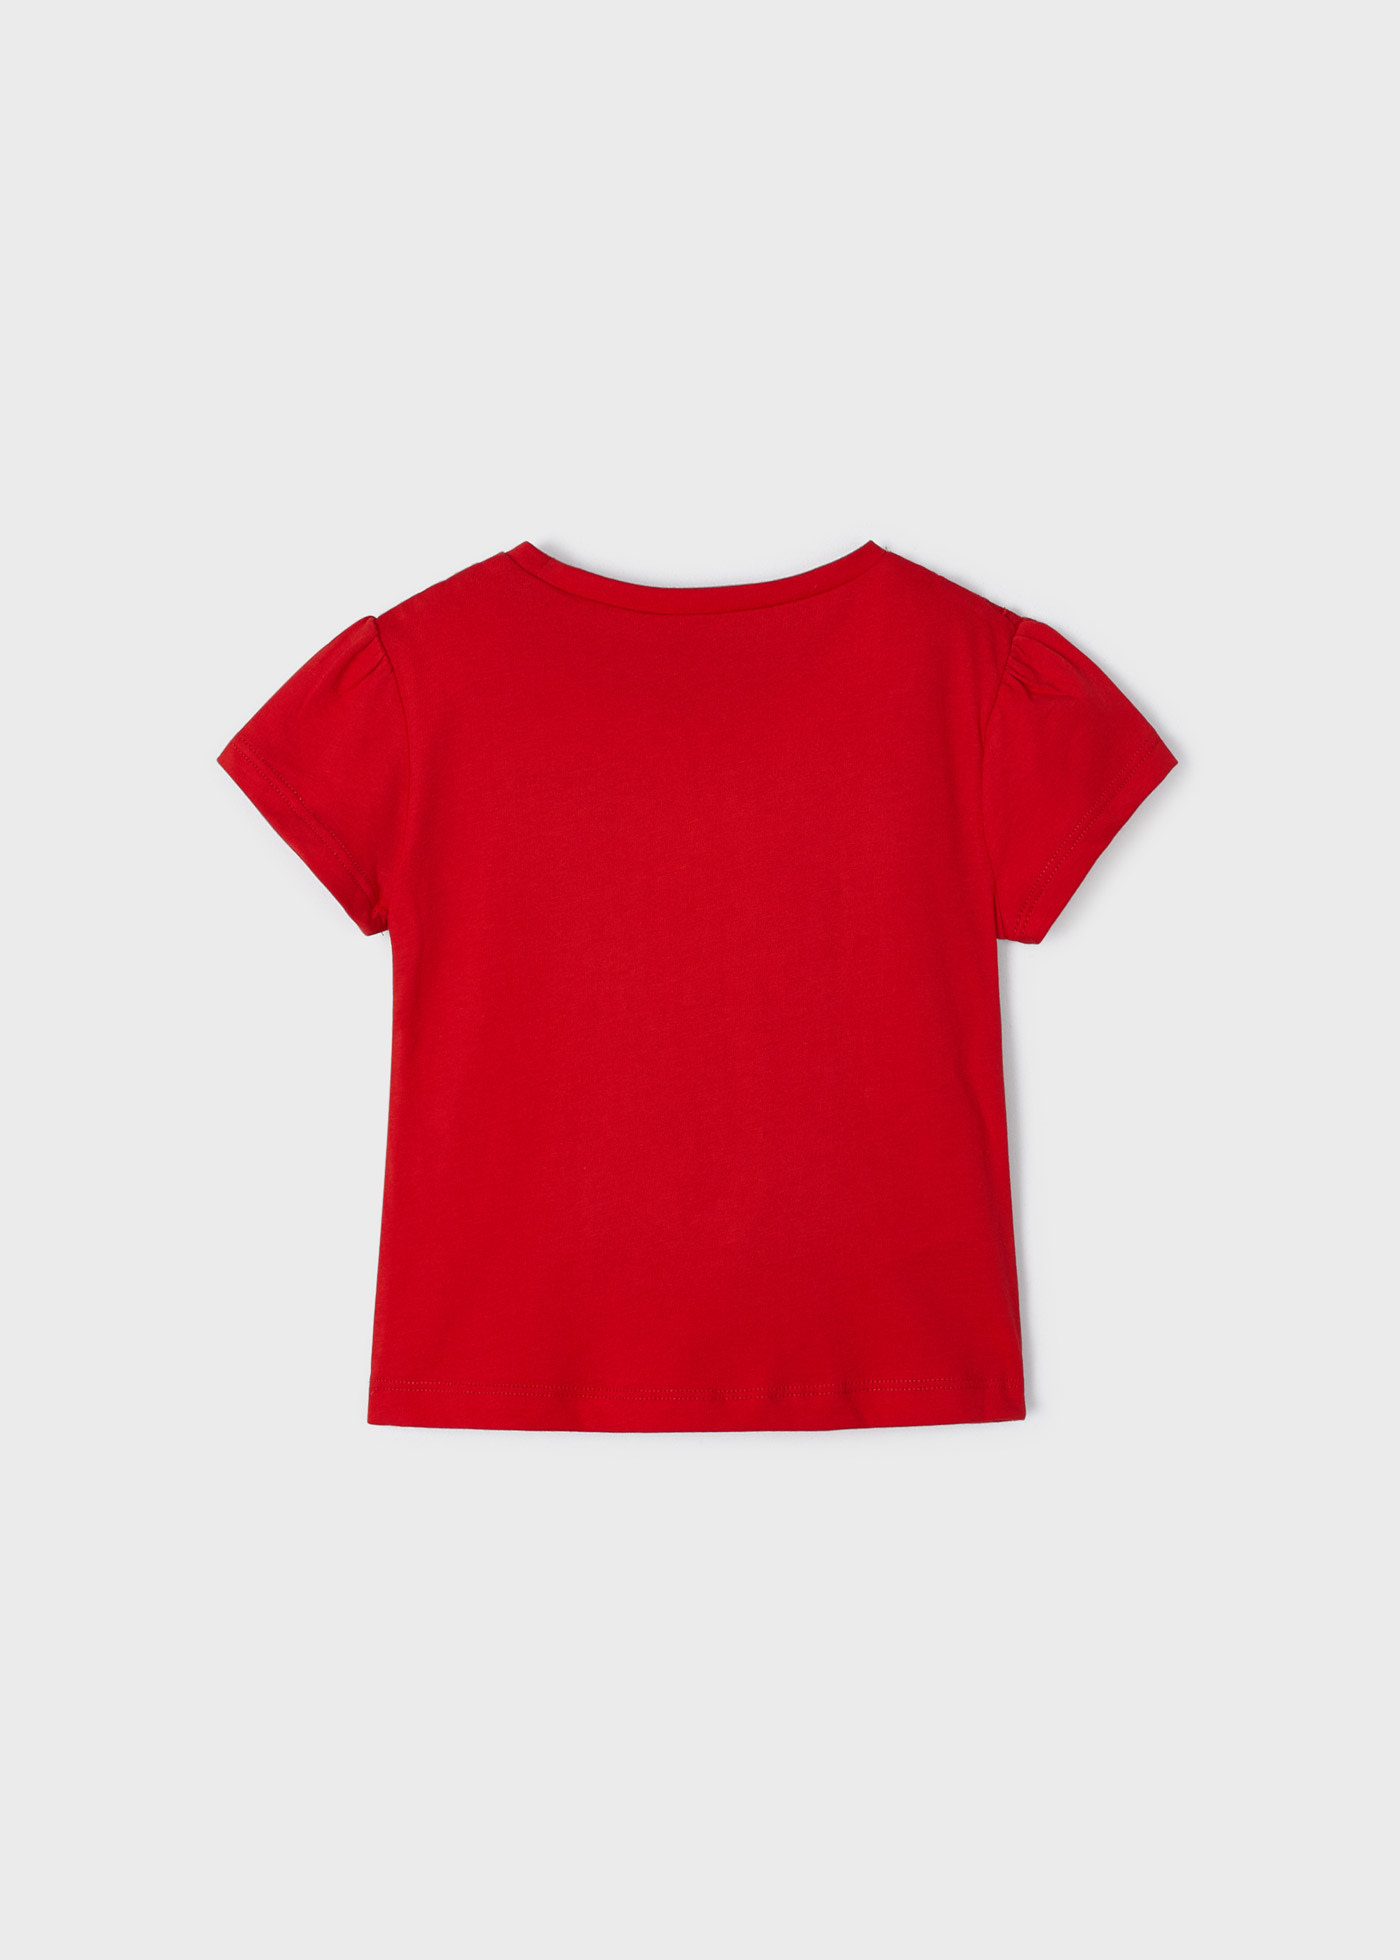 Camiseta niña Mayoral 3070p - Moda Infantil Online Mayoral